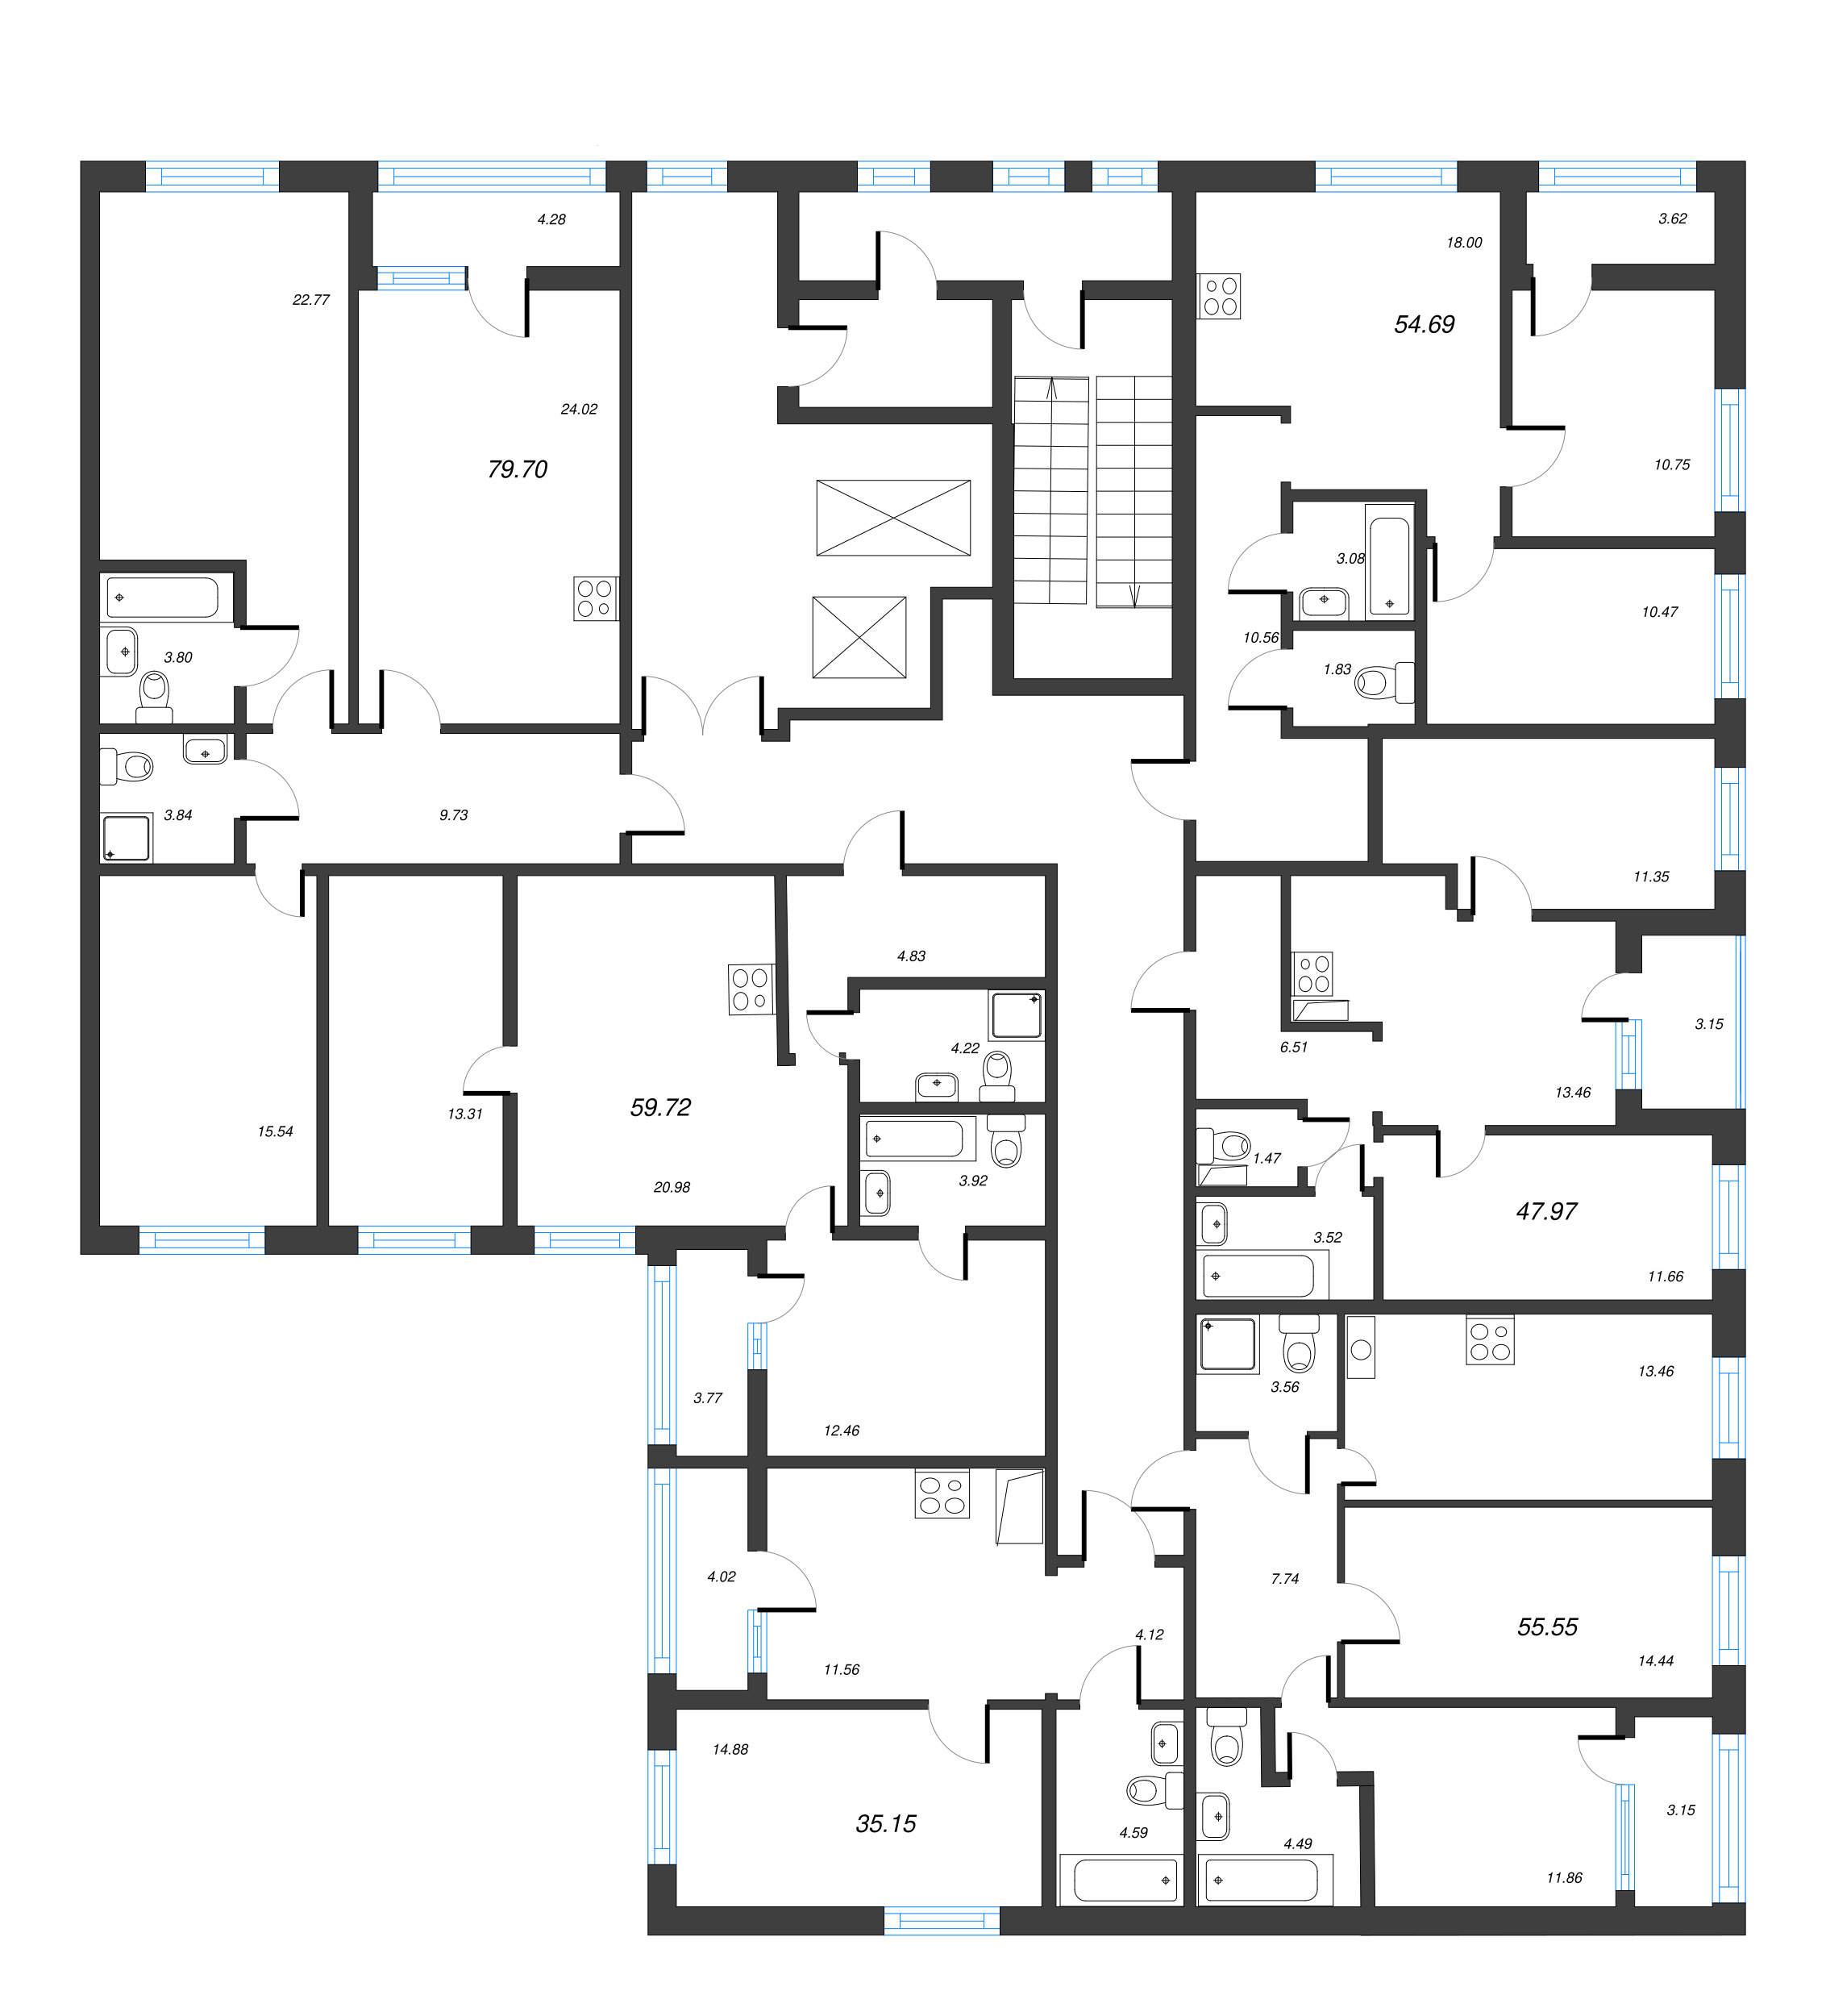 3-комнатная (Евро) квартира, 54.69 м² - планировка этажа